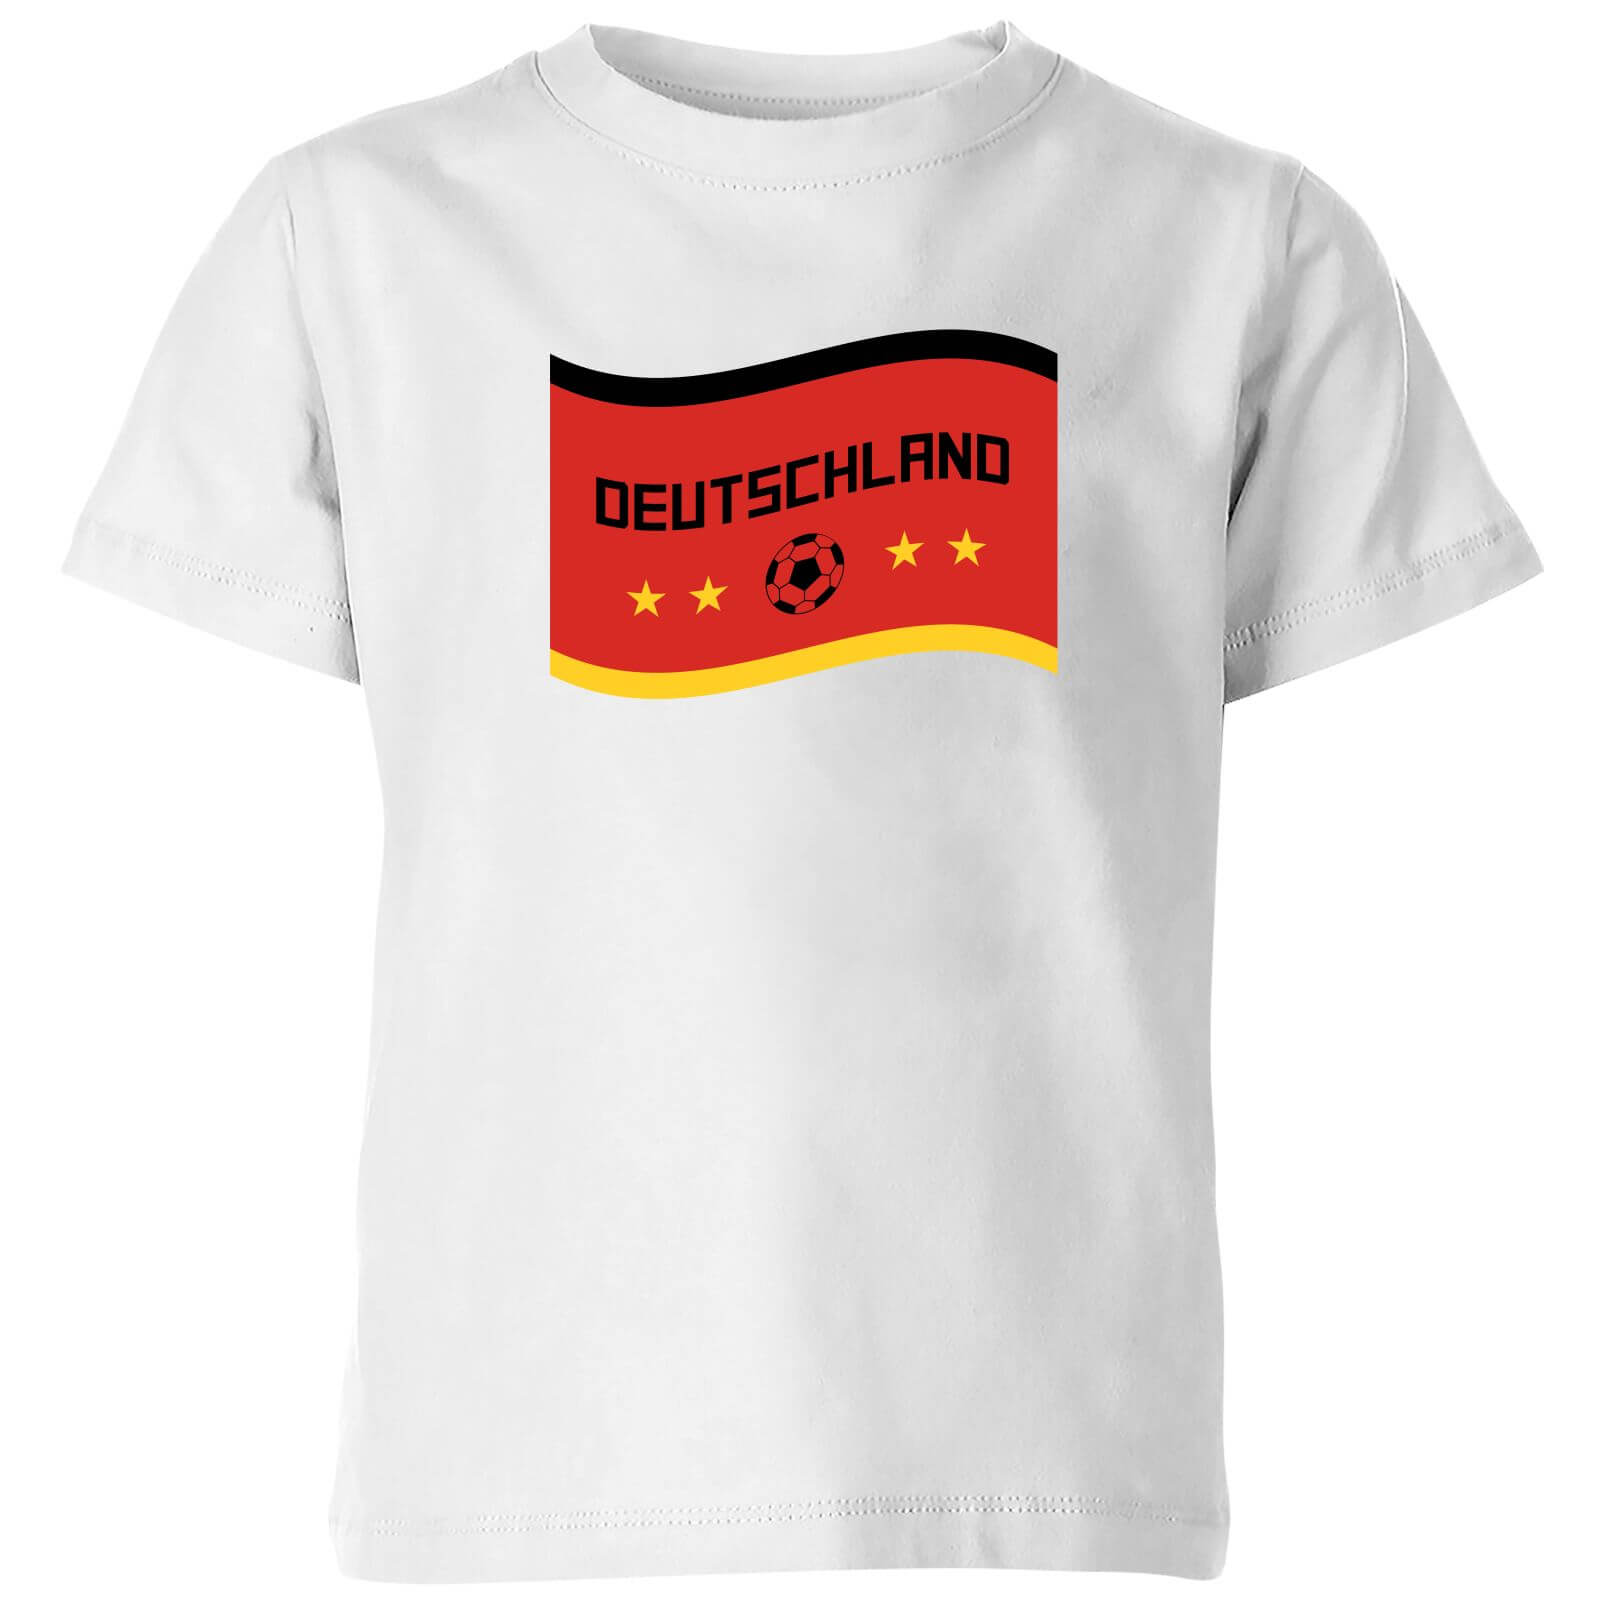 Deutschland Kids' T-Shirt - White - 3-4 Years - White